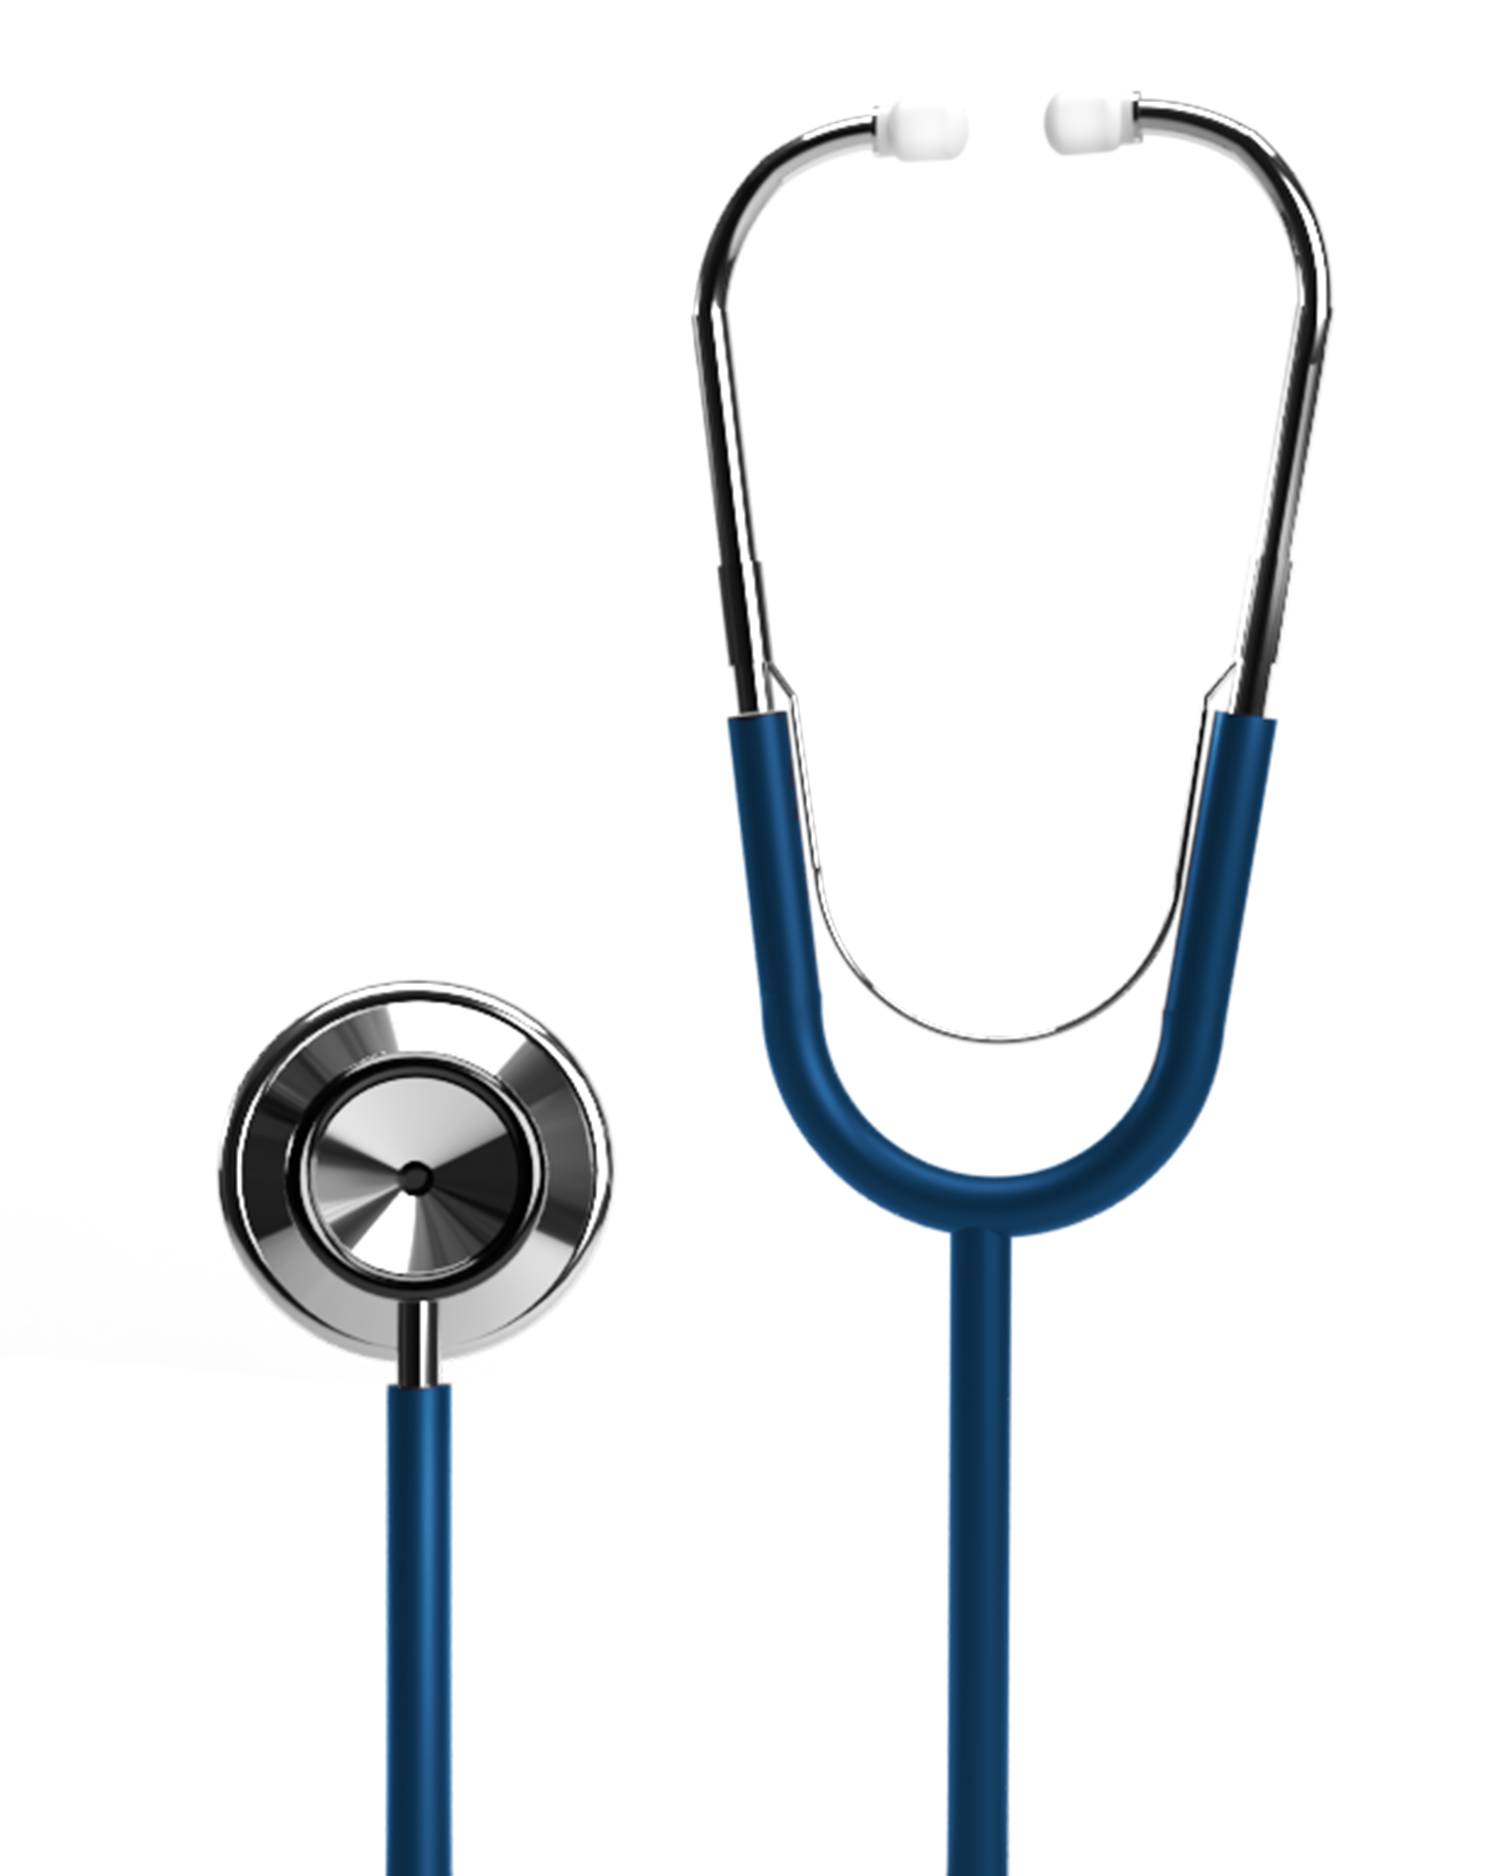 BV Medical Professional Series Dual-Head Stethoscope Navy Blue